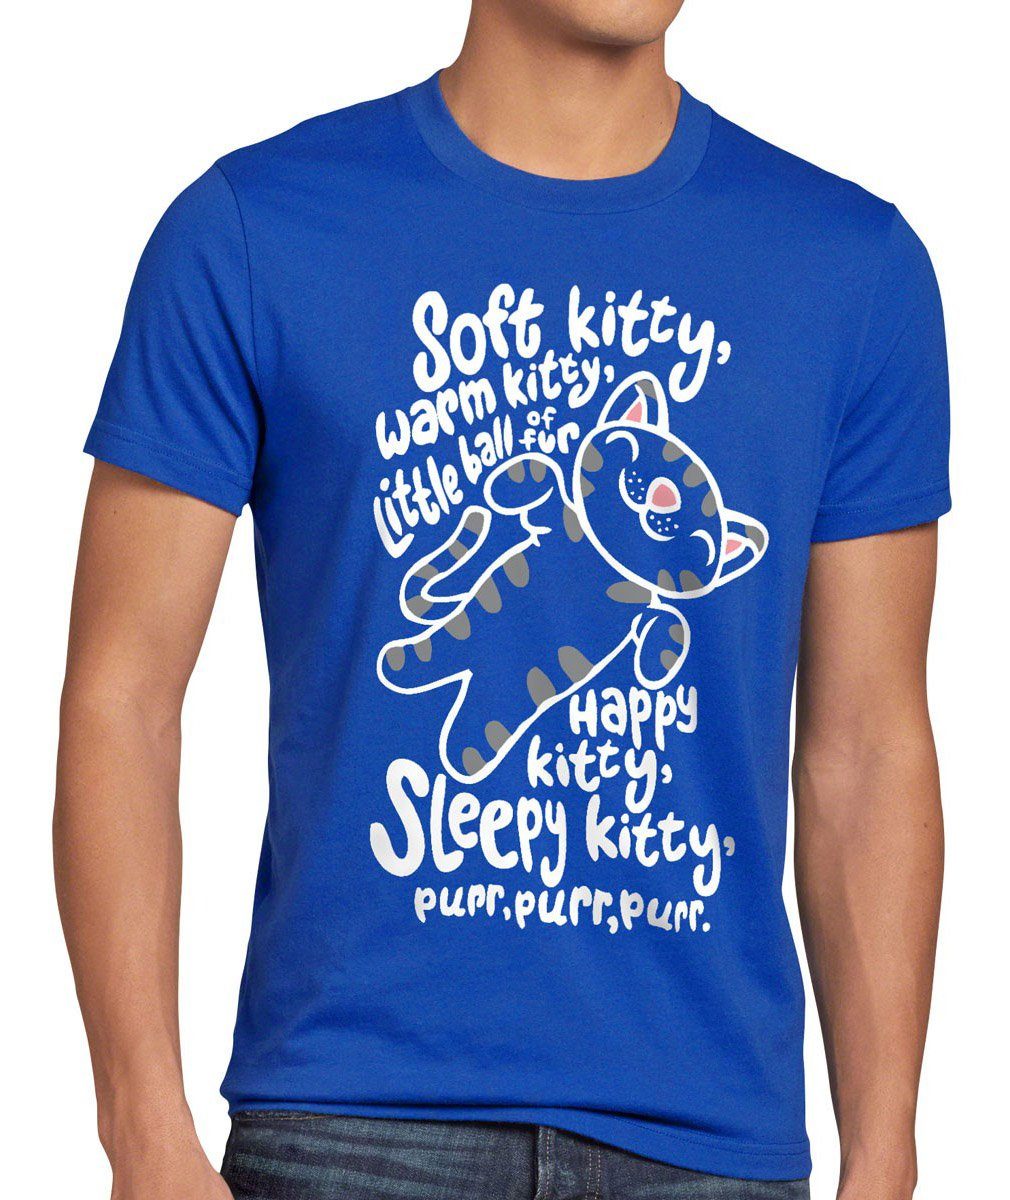 big katze T-Shirt bang Soft sleepy penny blau Kitty happy theory cat Print-Shirt style3 Herren sheldon cooper